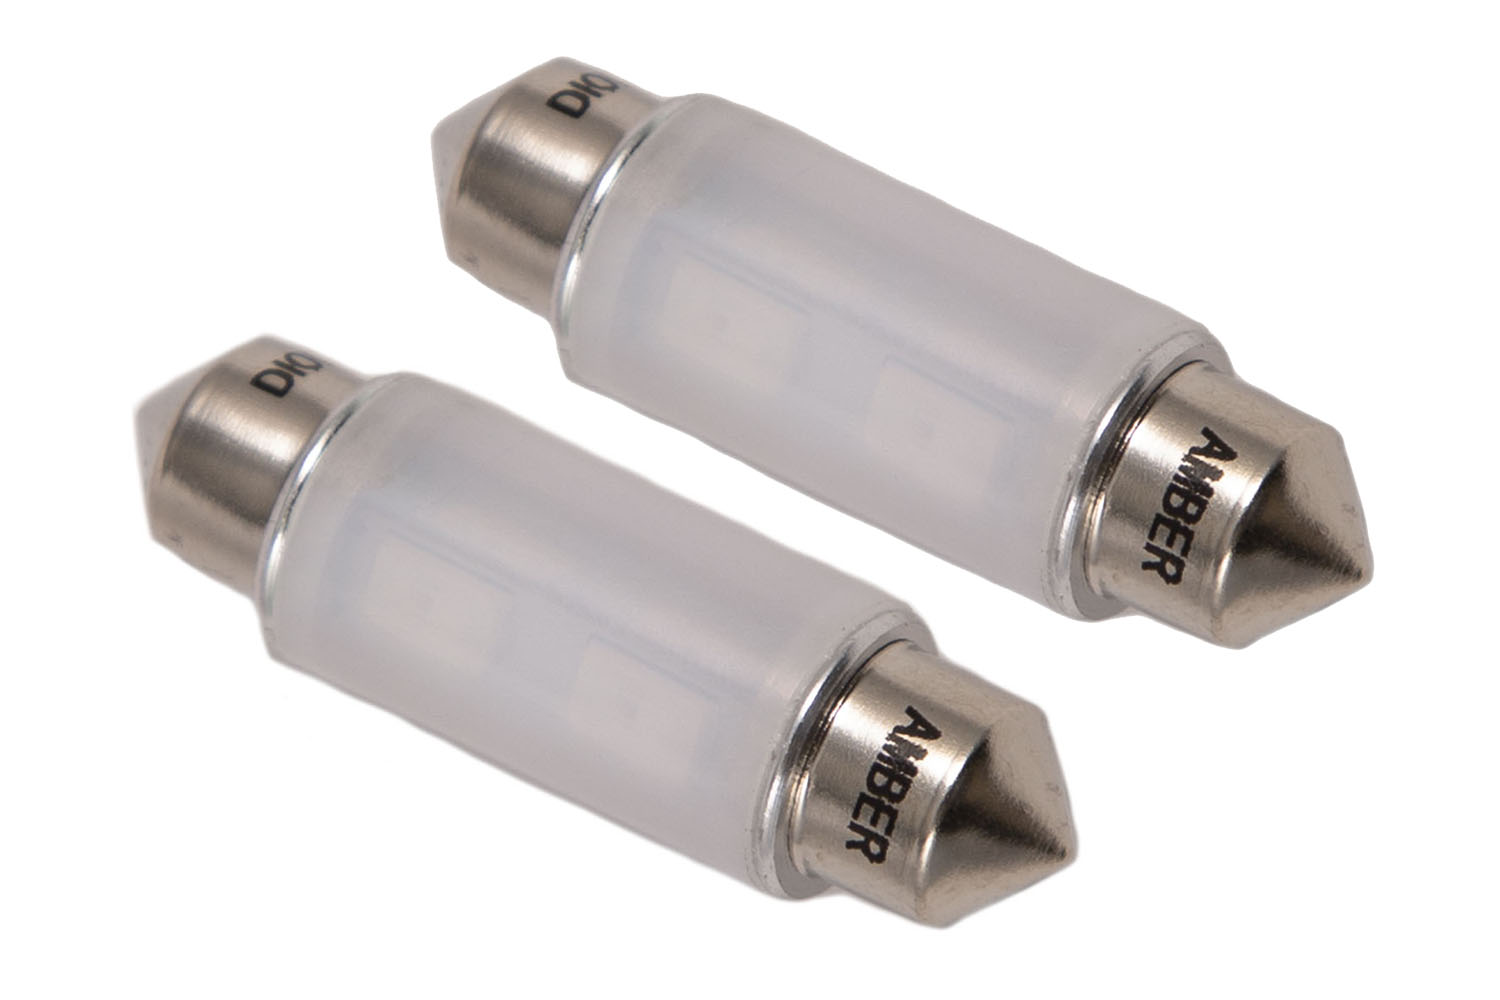 39mm HP6 LED Bulb LED Warm White Single Diode Dynamics